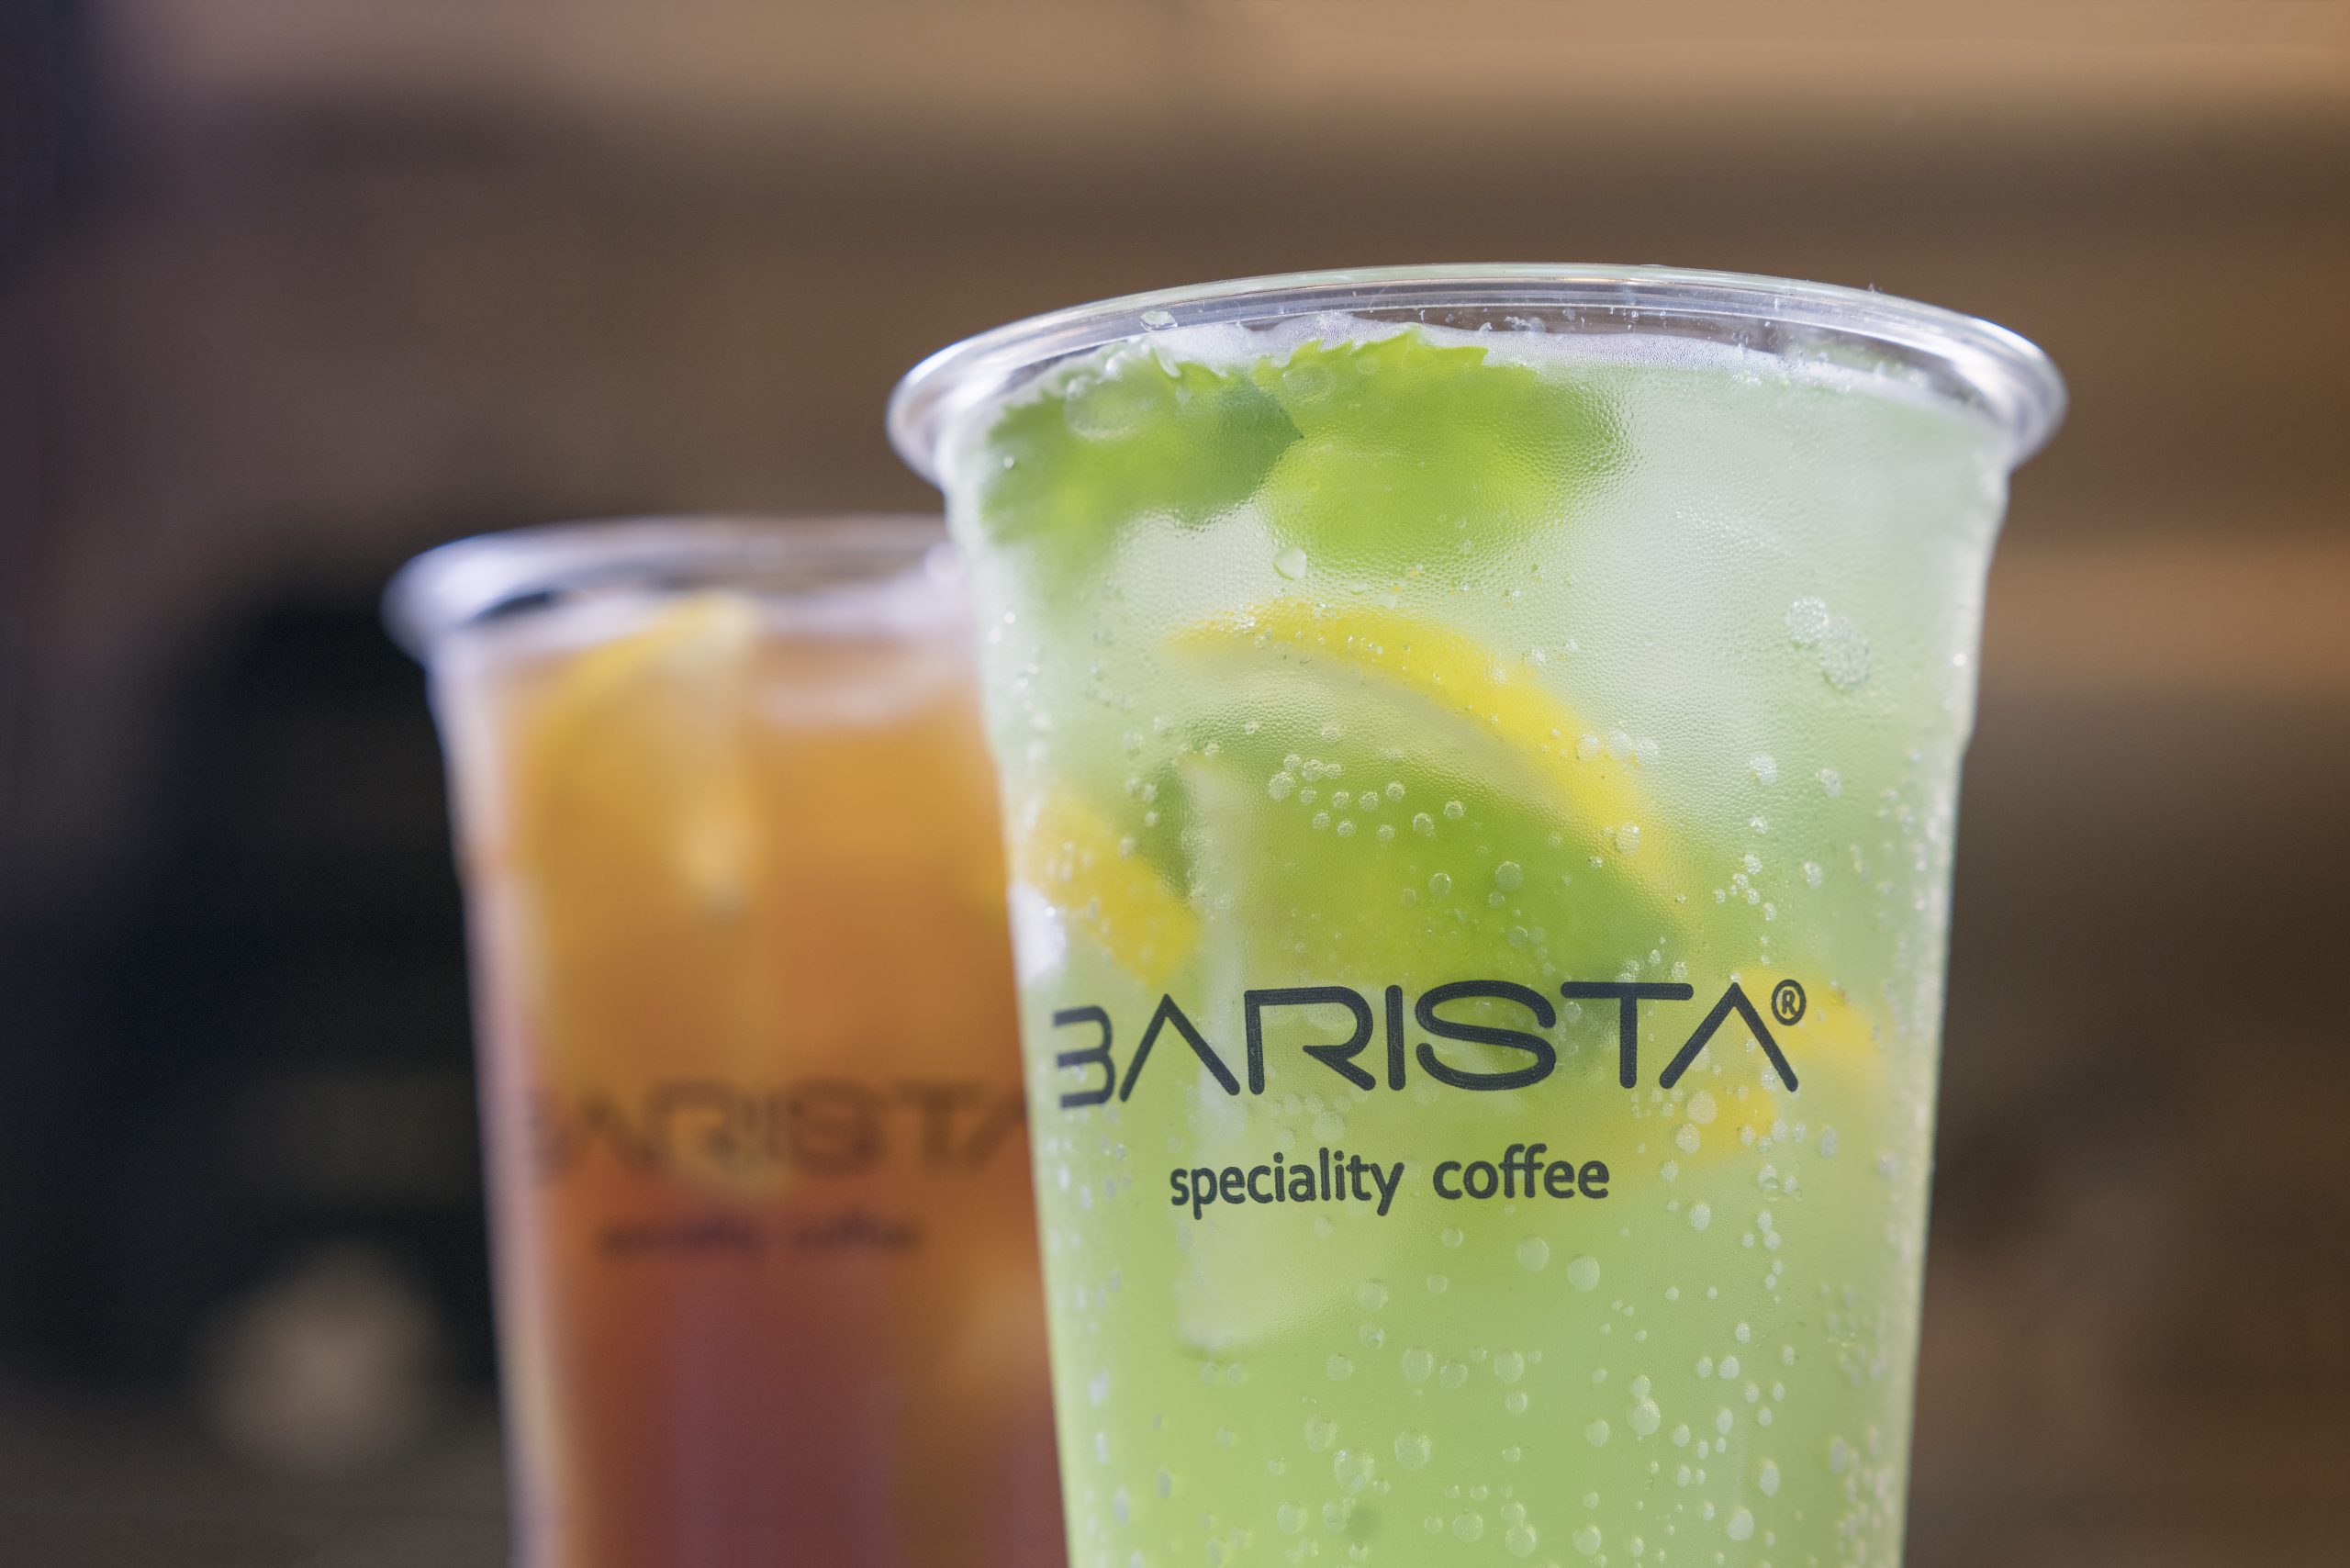 Barista Specialty Coffee - A Promo Photoshoot for Social Media